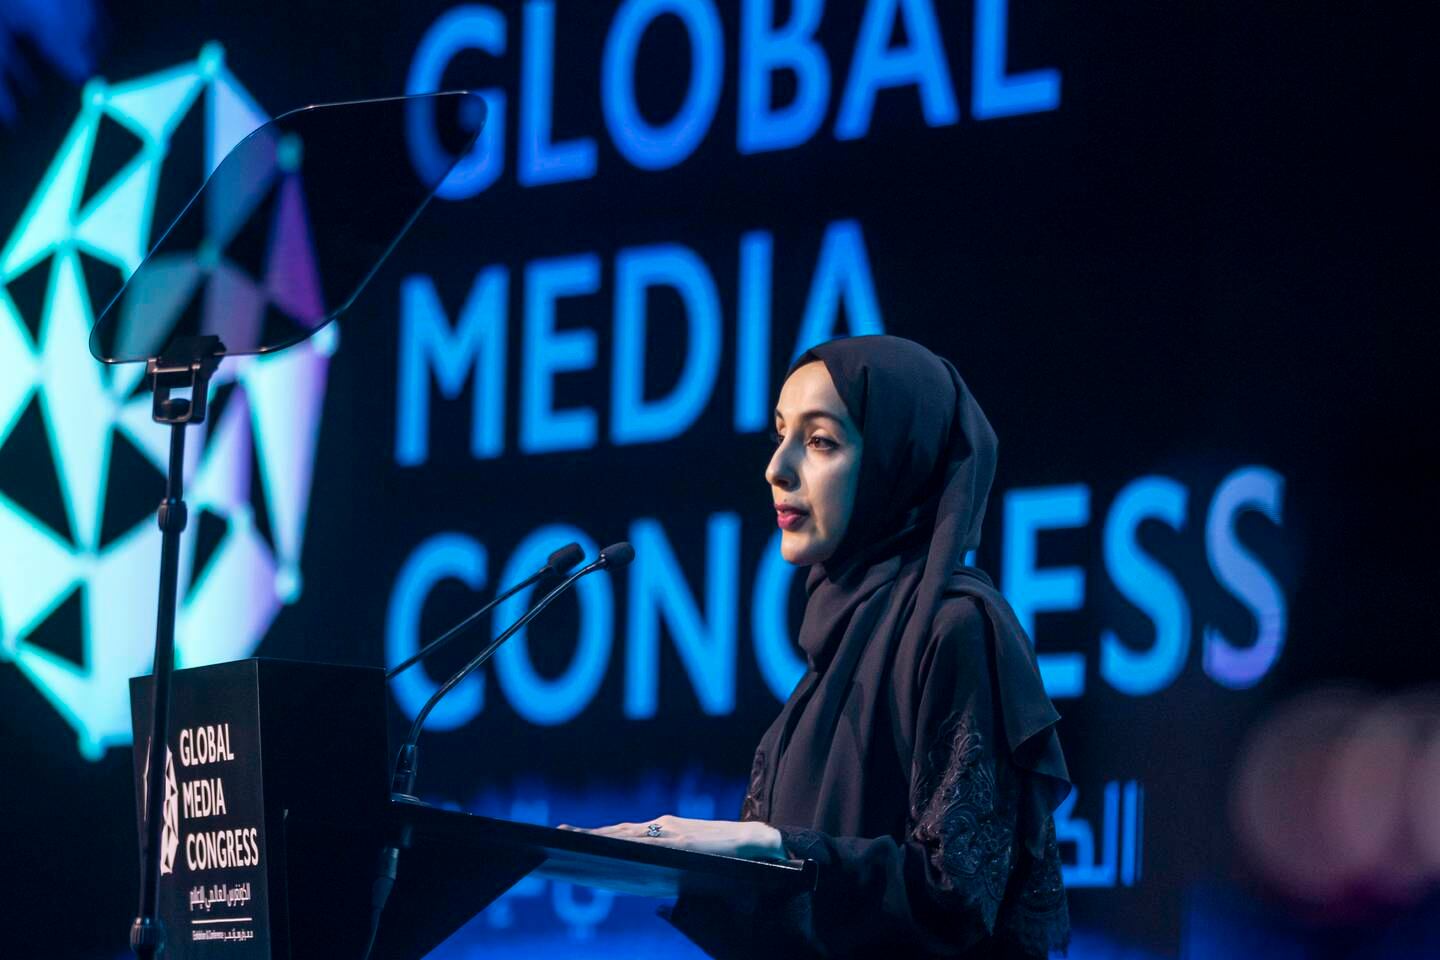 Shamma Al Mazrui talks about pressing environmental challenges at the inaugural Global Media Congress held in Abu Dhabi in November. Antonie Robertson / The National
